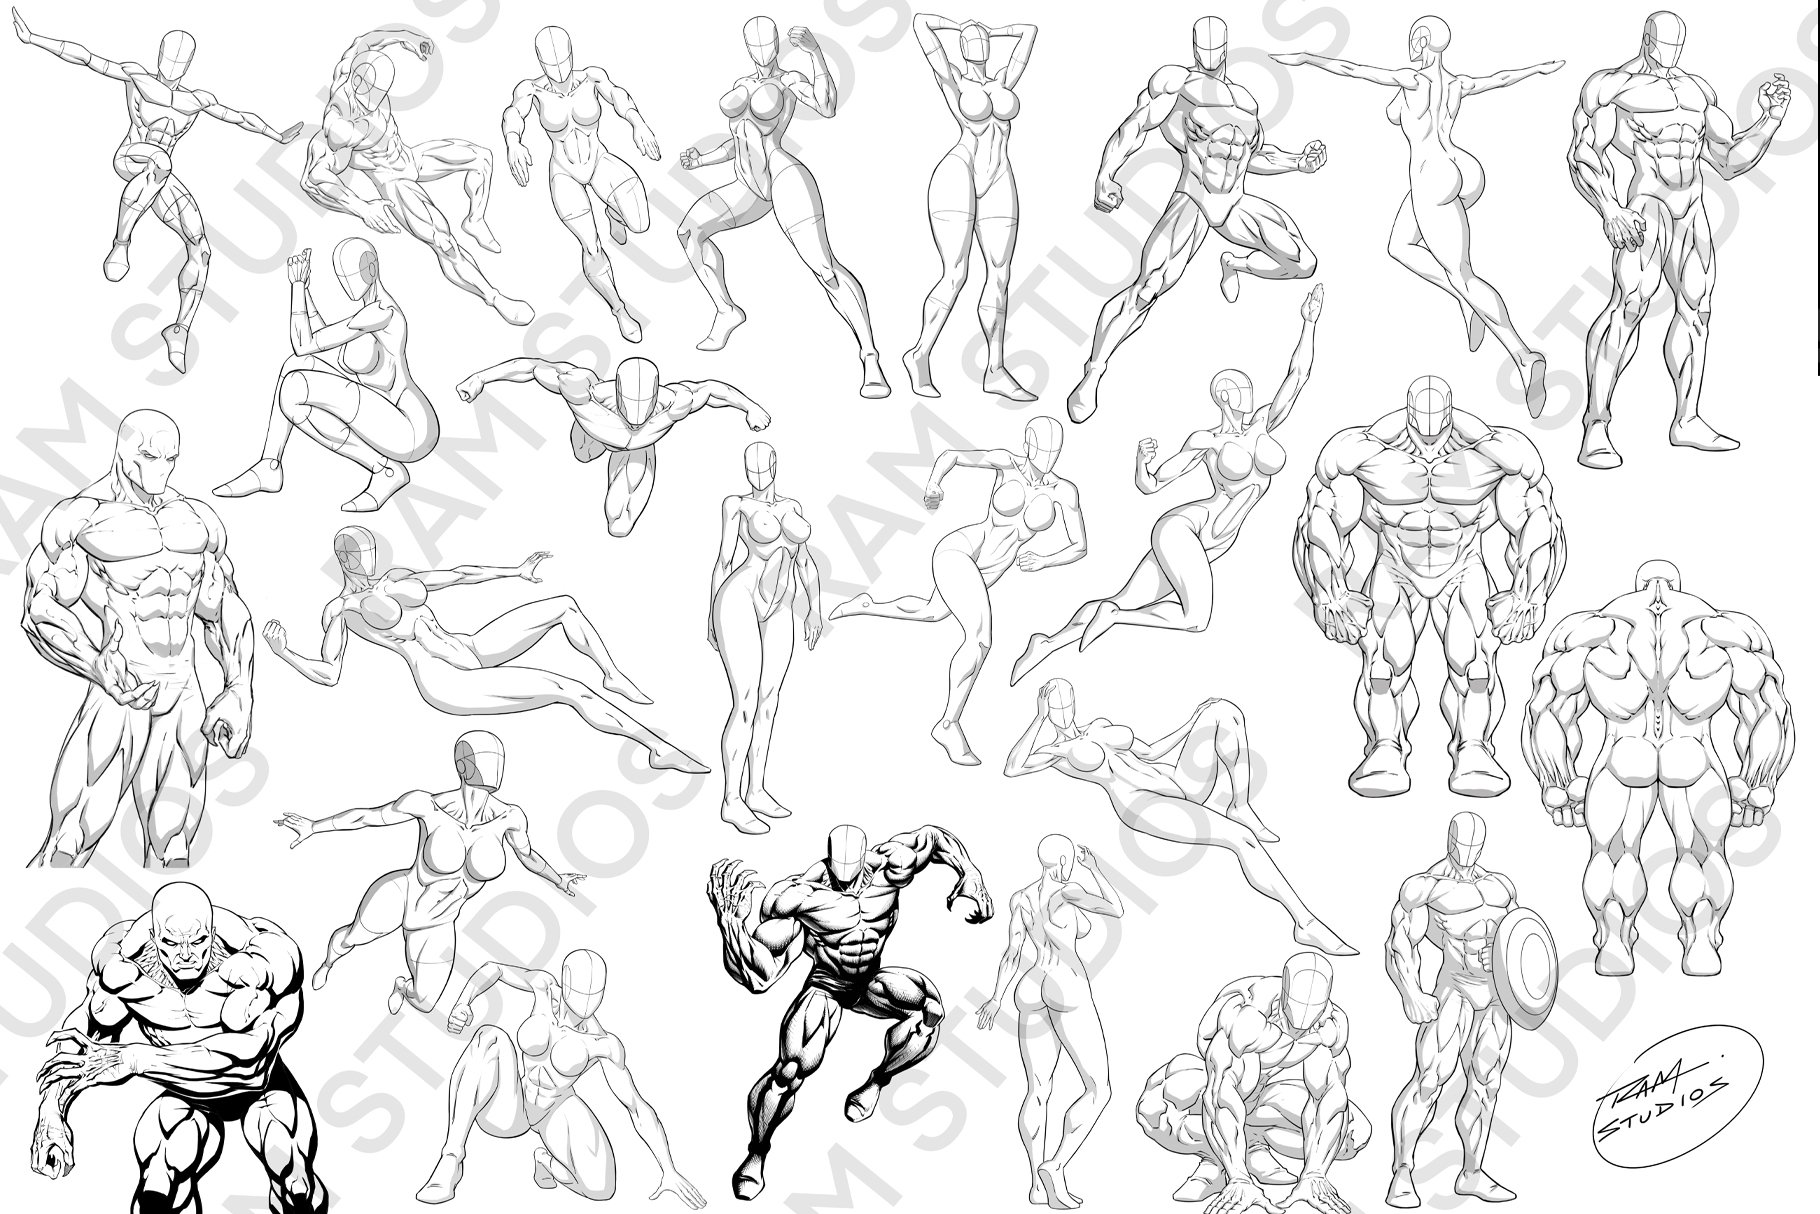 Superhero Pose Reference Drawings | スケッチ, スケッチの基本, イラスト